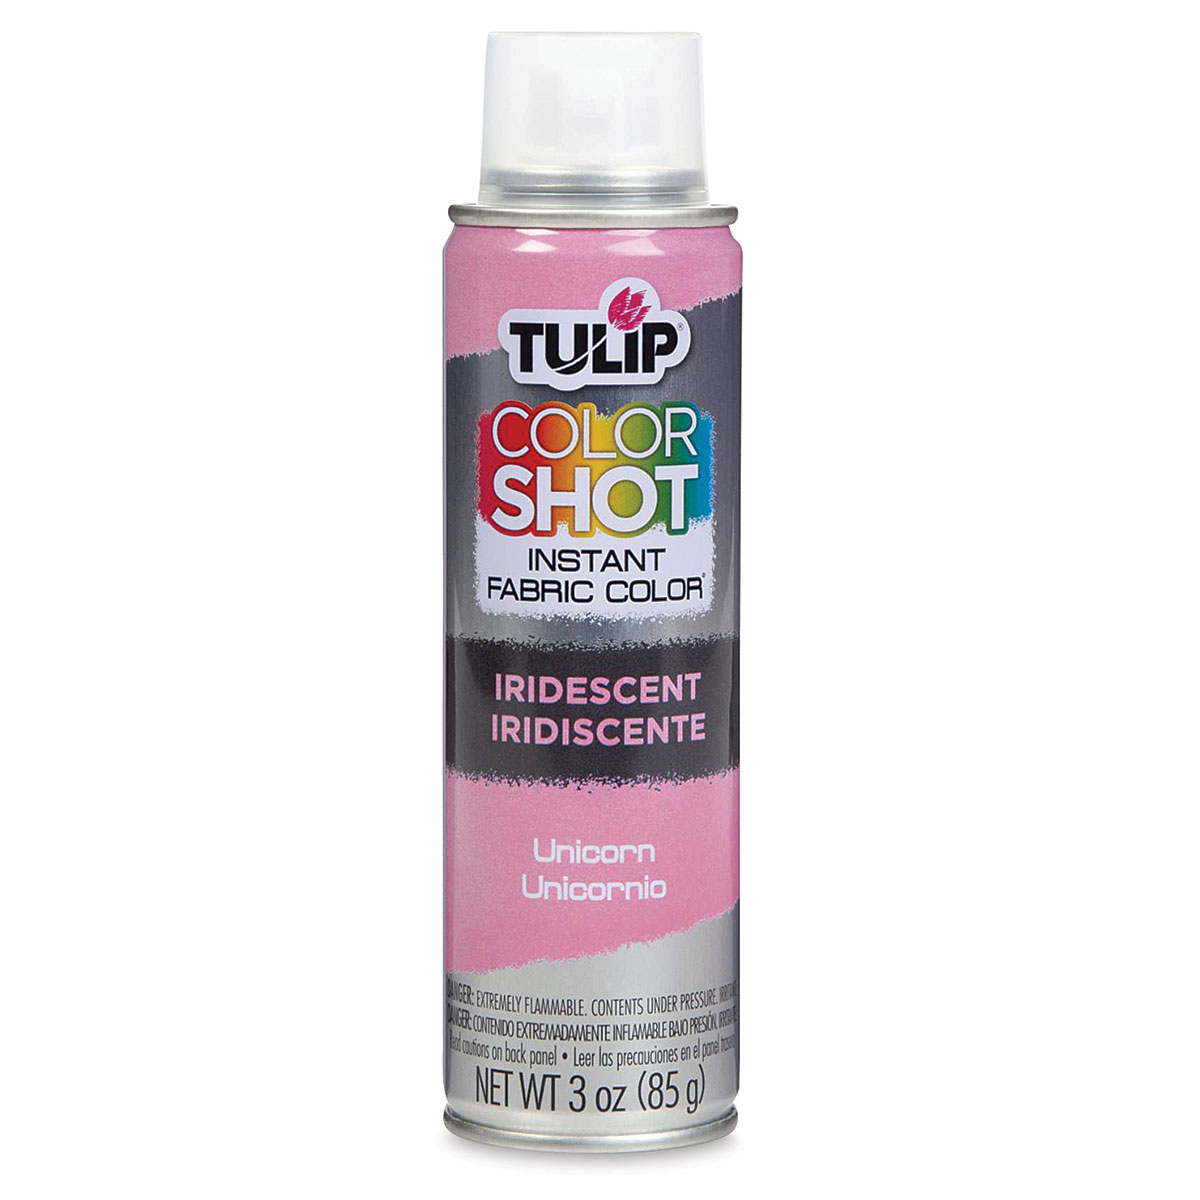 Tulip Fabric Spray Paint Silver Glitter 4 fl. oz.